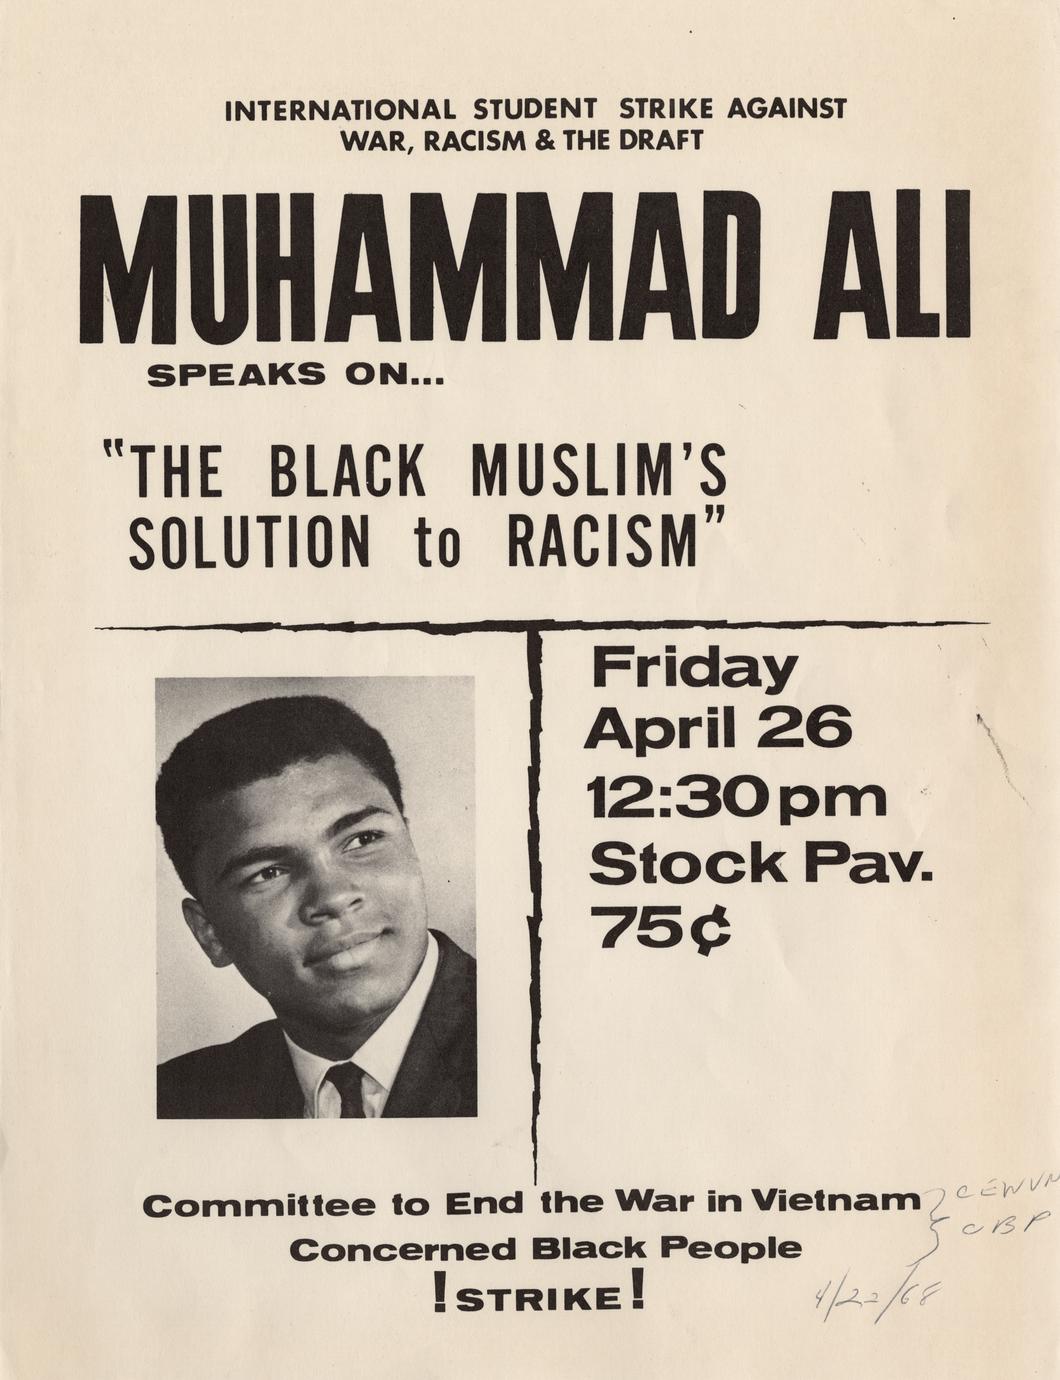 Muhammad Ali's speaks on "the black Muslim's solution to racism"